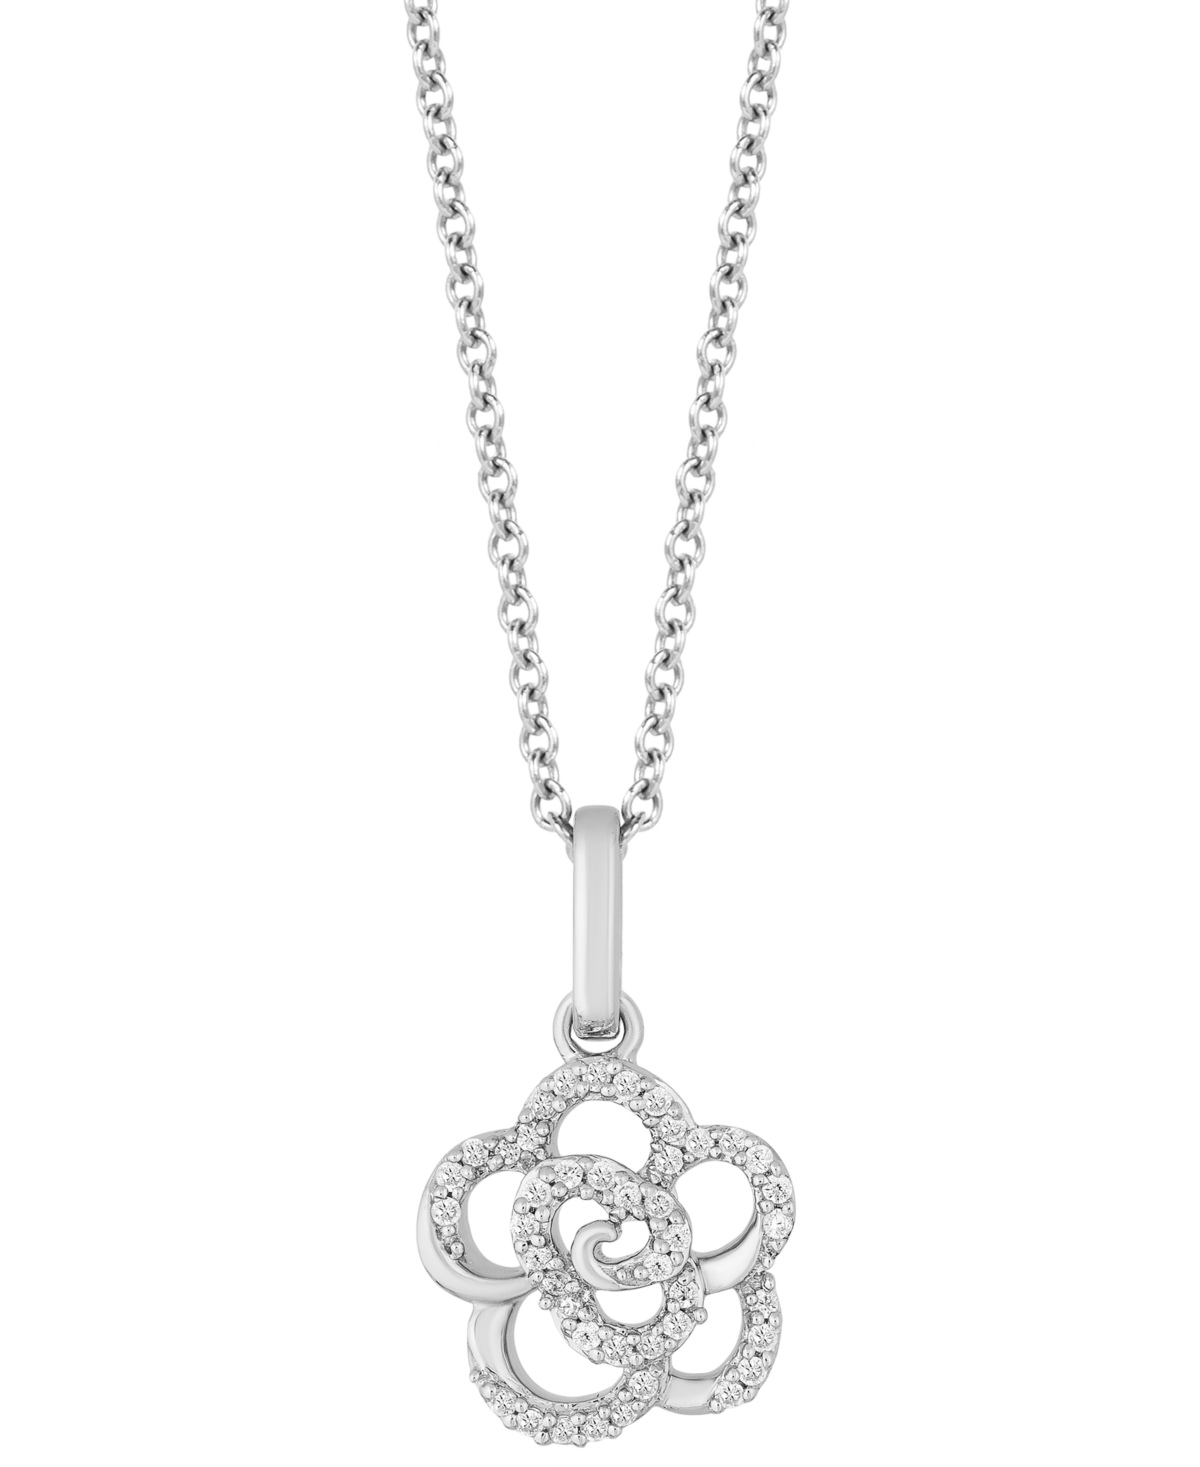 Hallmark Diamonds Tokens by Hallmark Diamonds Rose Joy pendant (1/10 ct. t.w.) in Sterling Silver, 16" + 2" extender